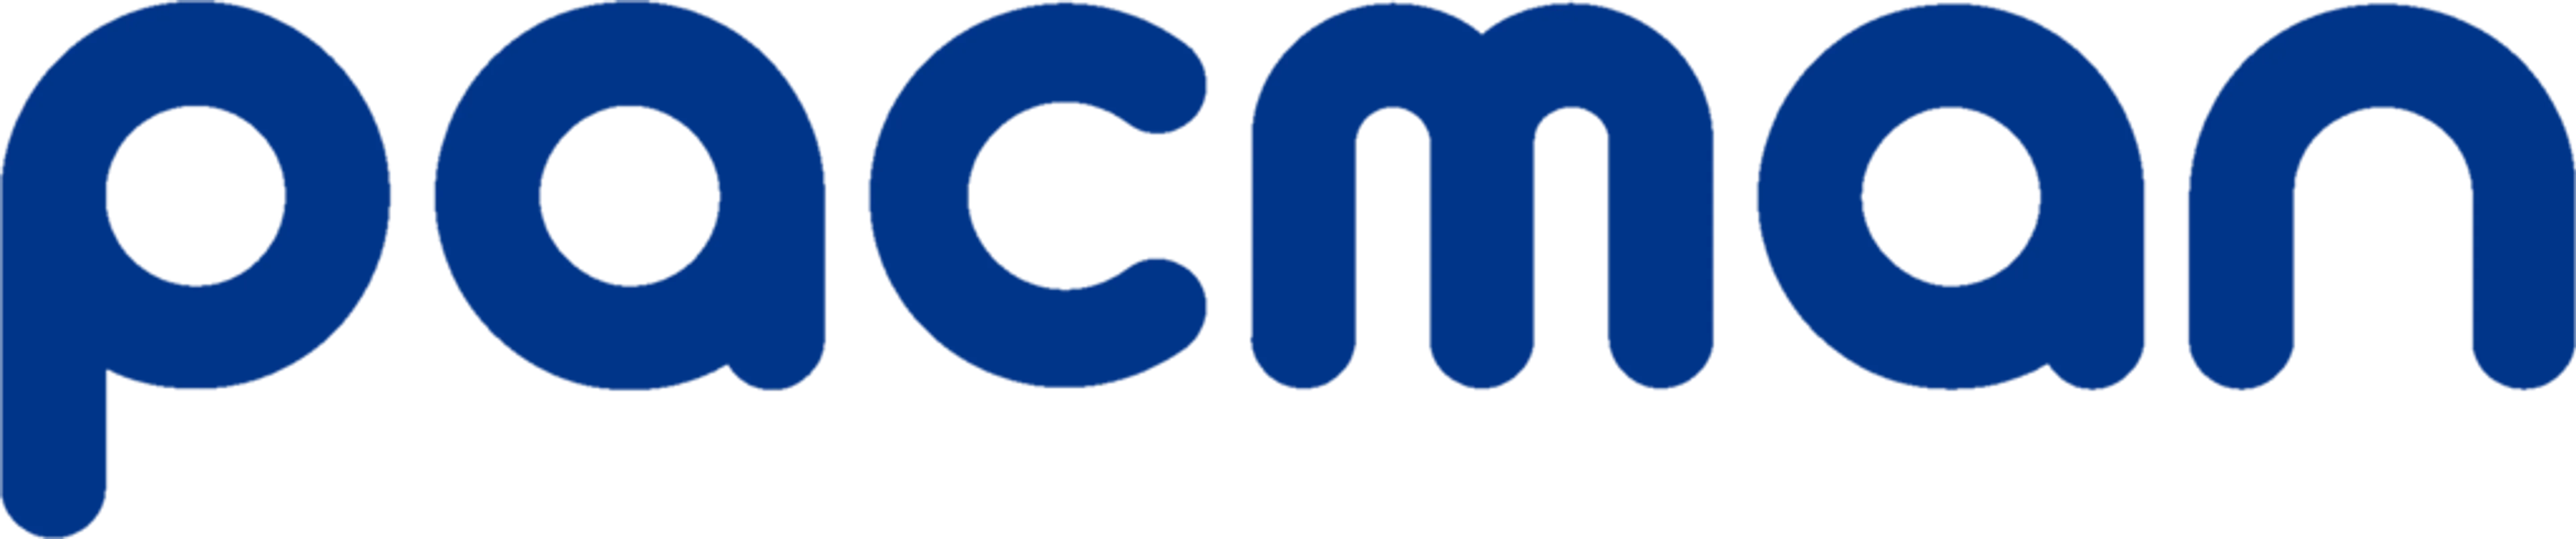 PACMAN logo